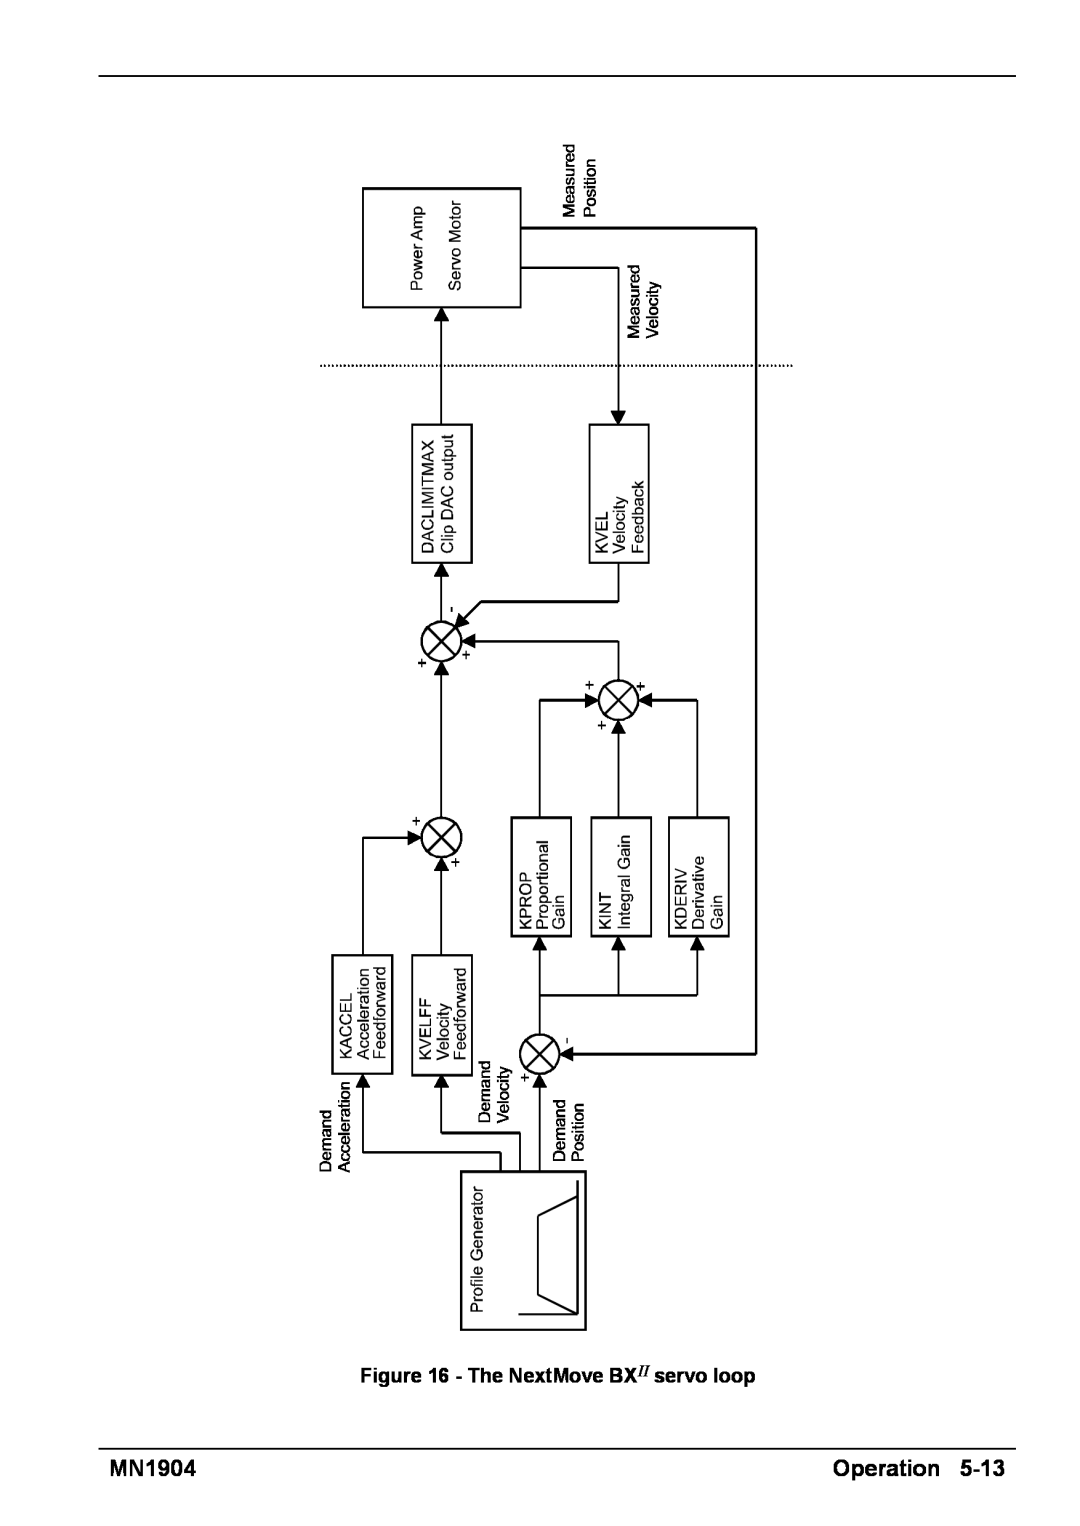 Baldor installation manual MN1904, Operation, The NextMove BXII servo loop 